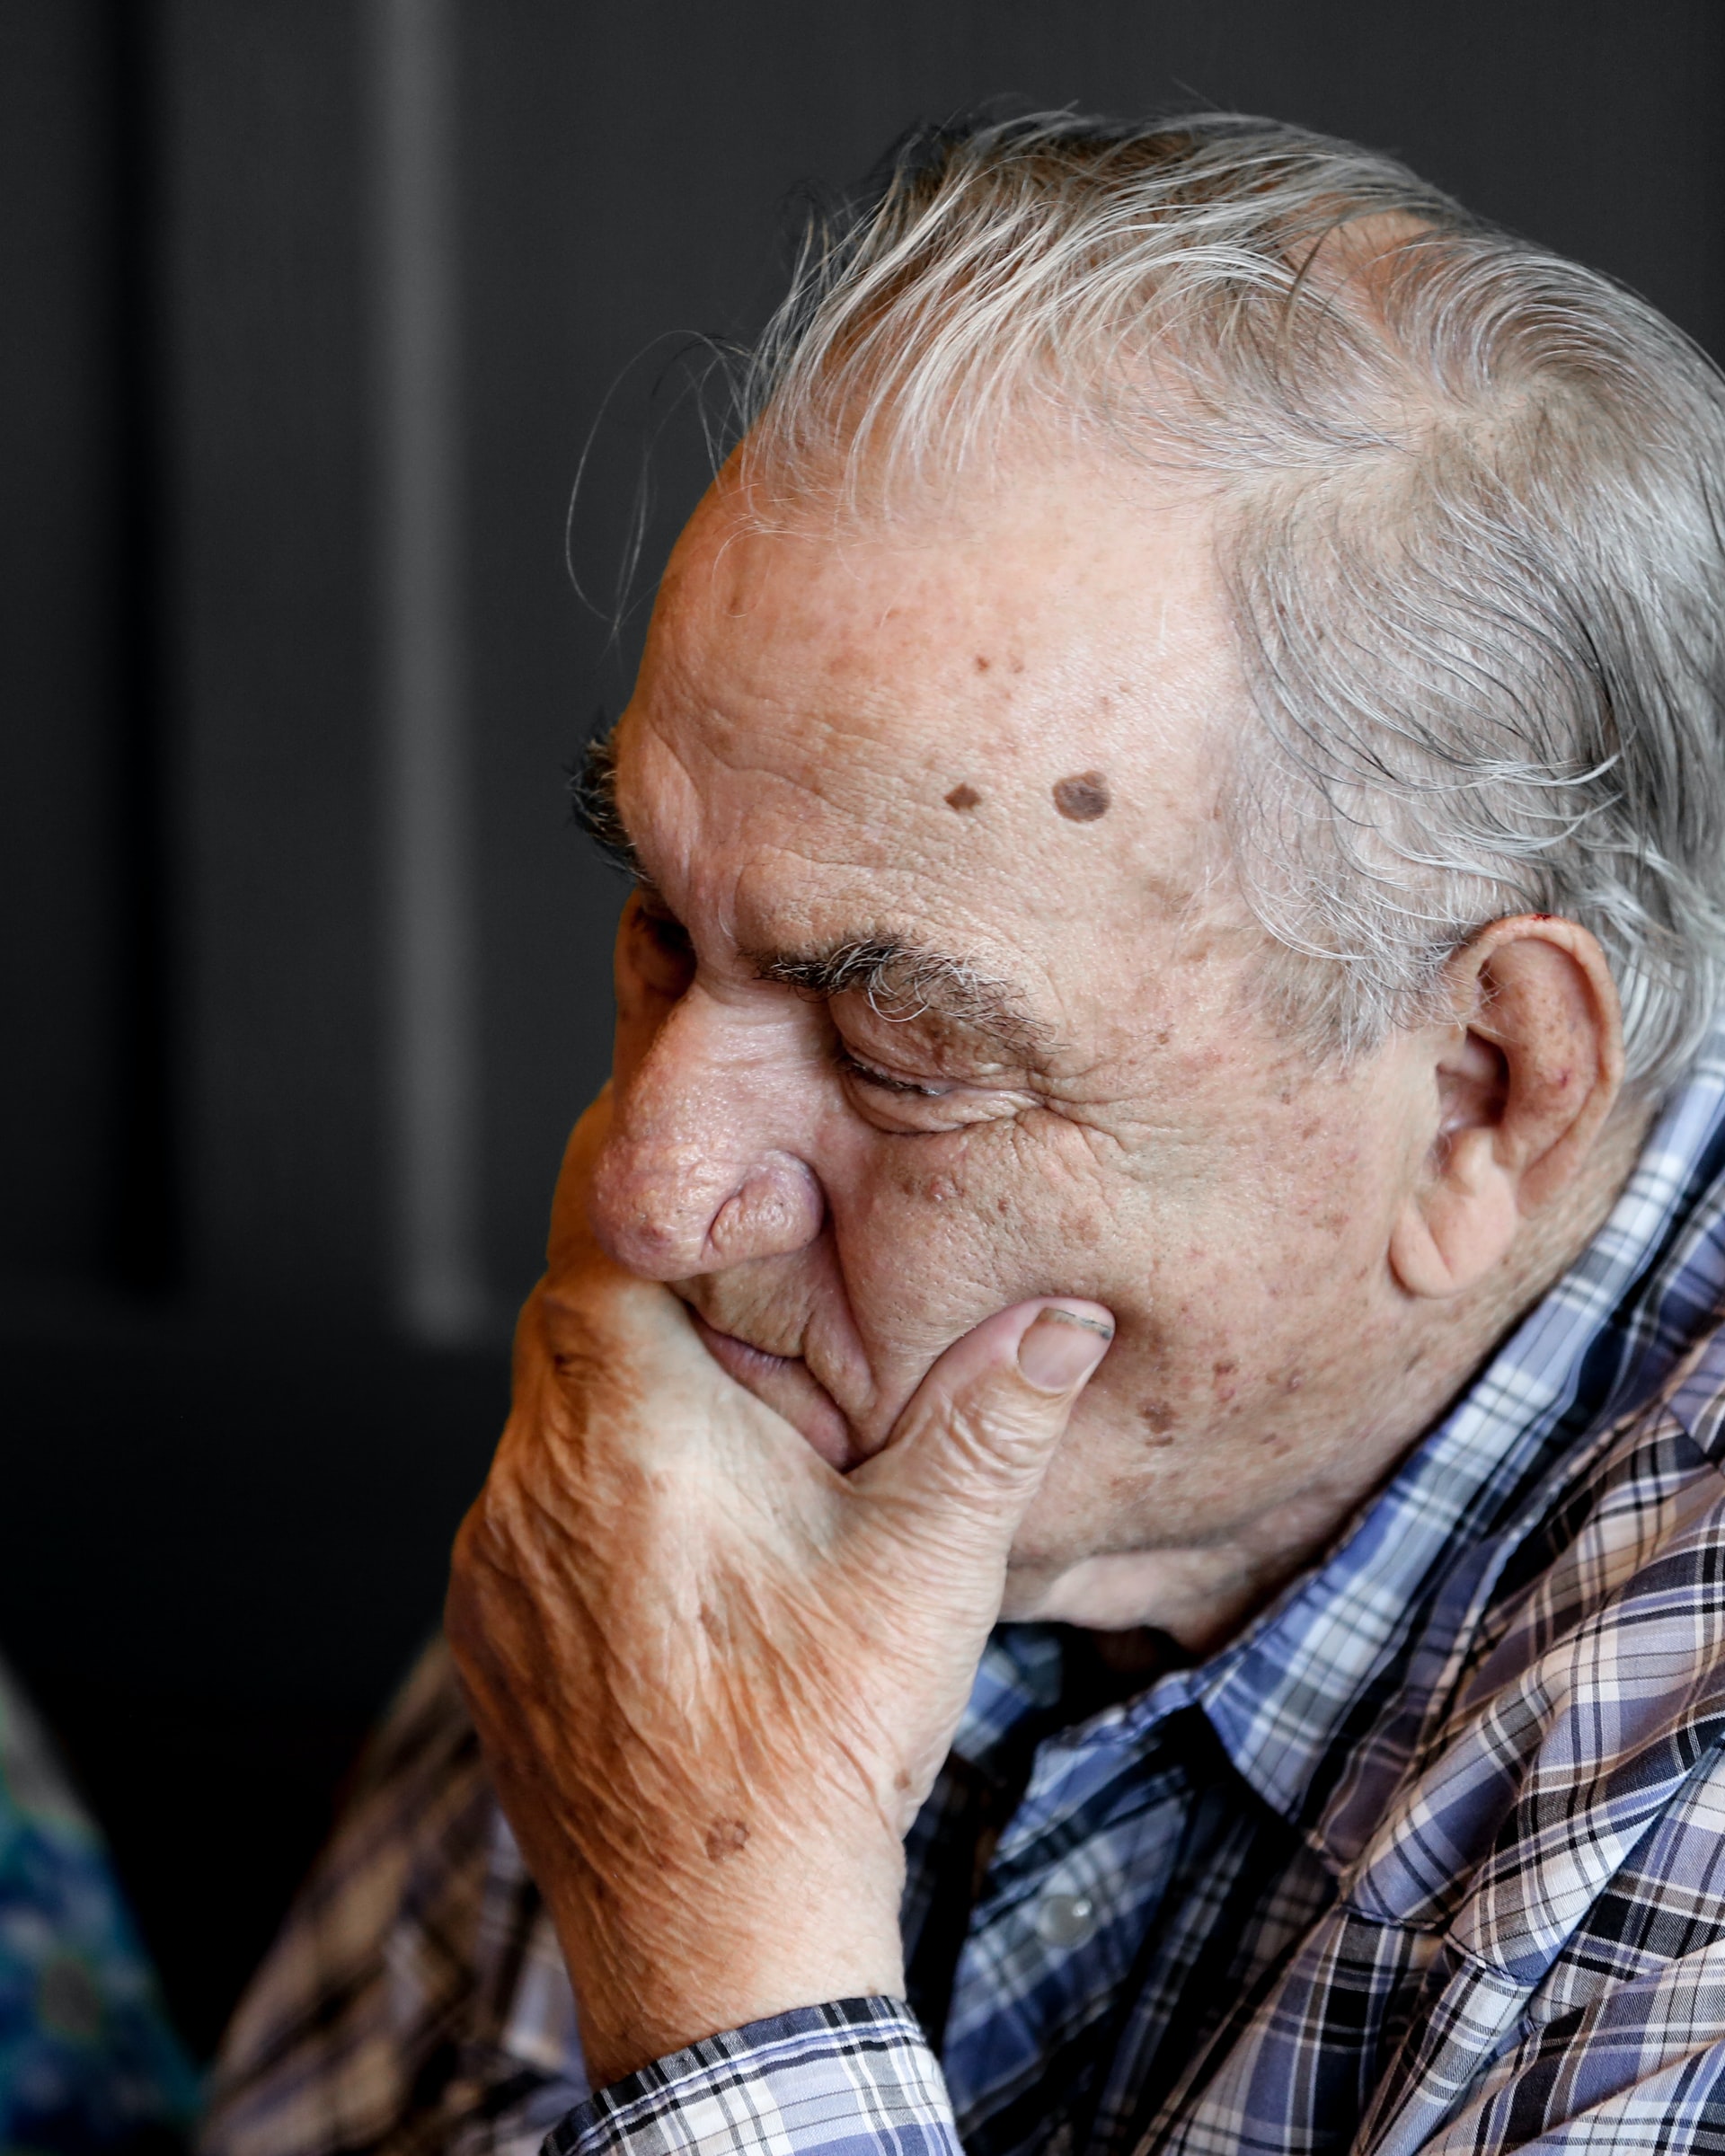 dementia rates declining in men